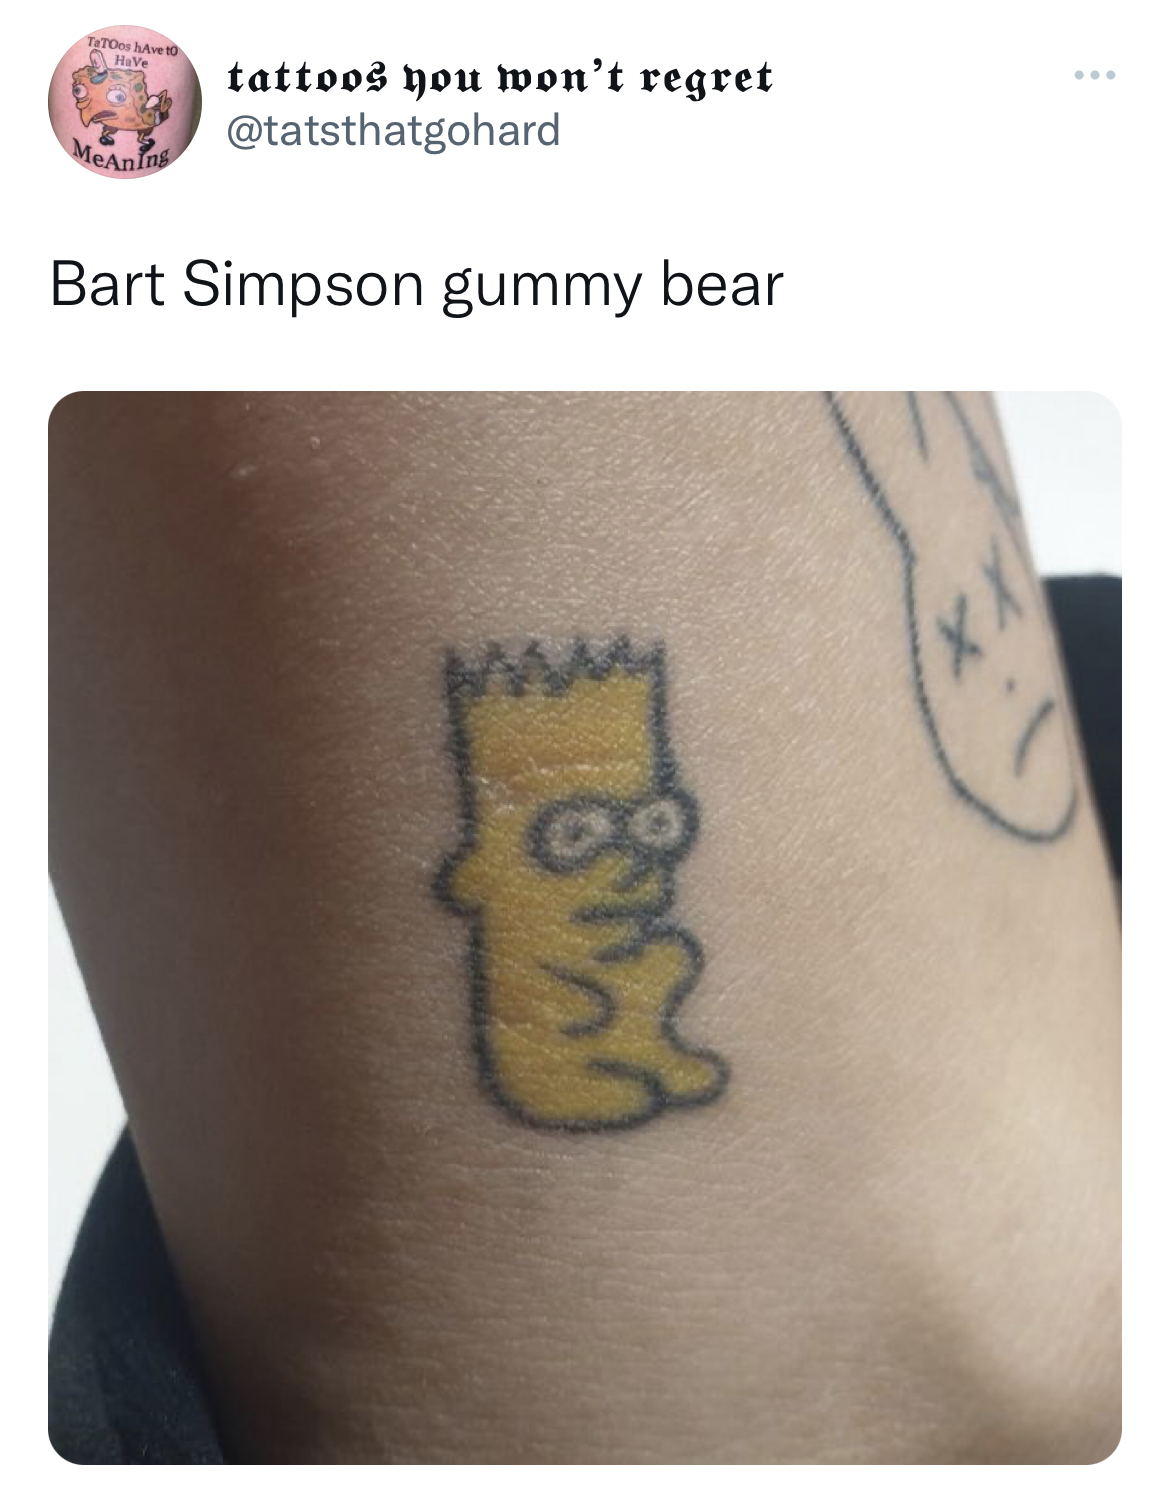 Funny and Fresh Tweets - tattoo - MeAnlas tattoos you won't regret Bart Simpson gummy bear M